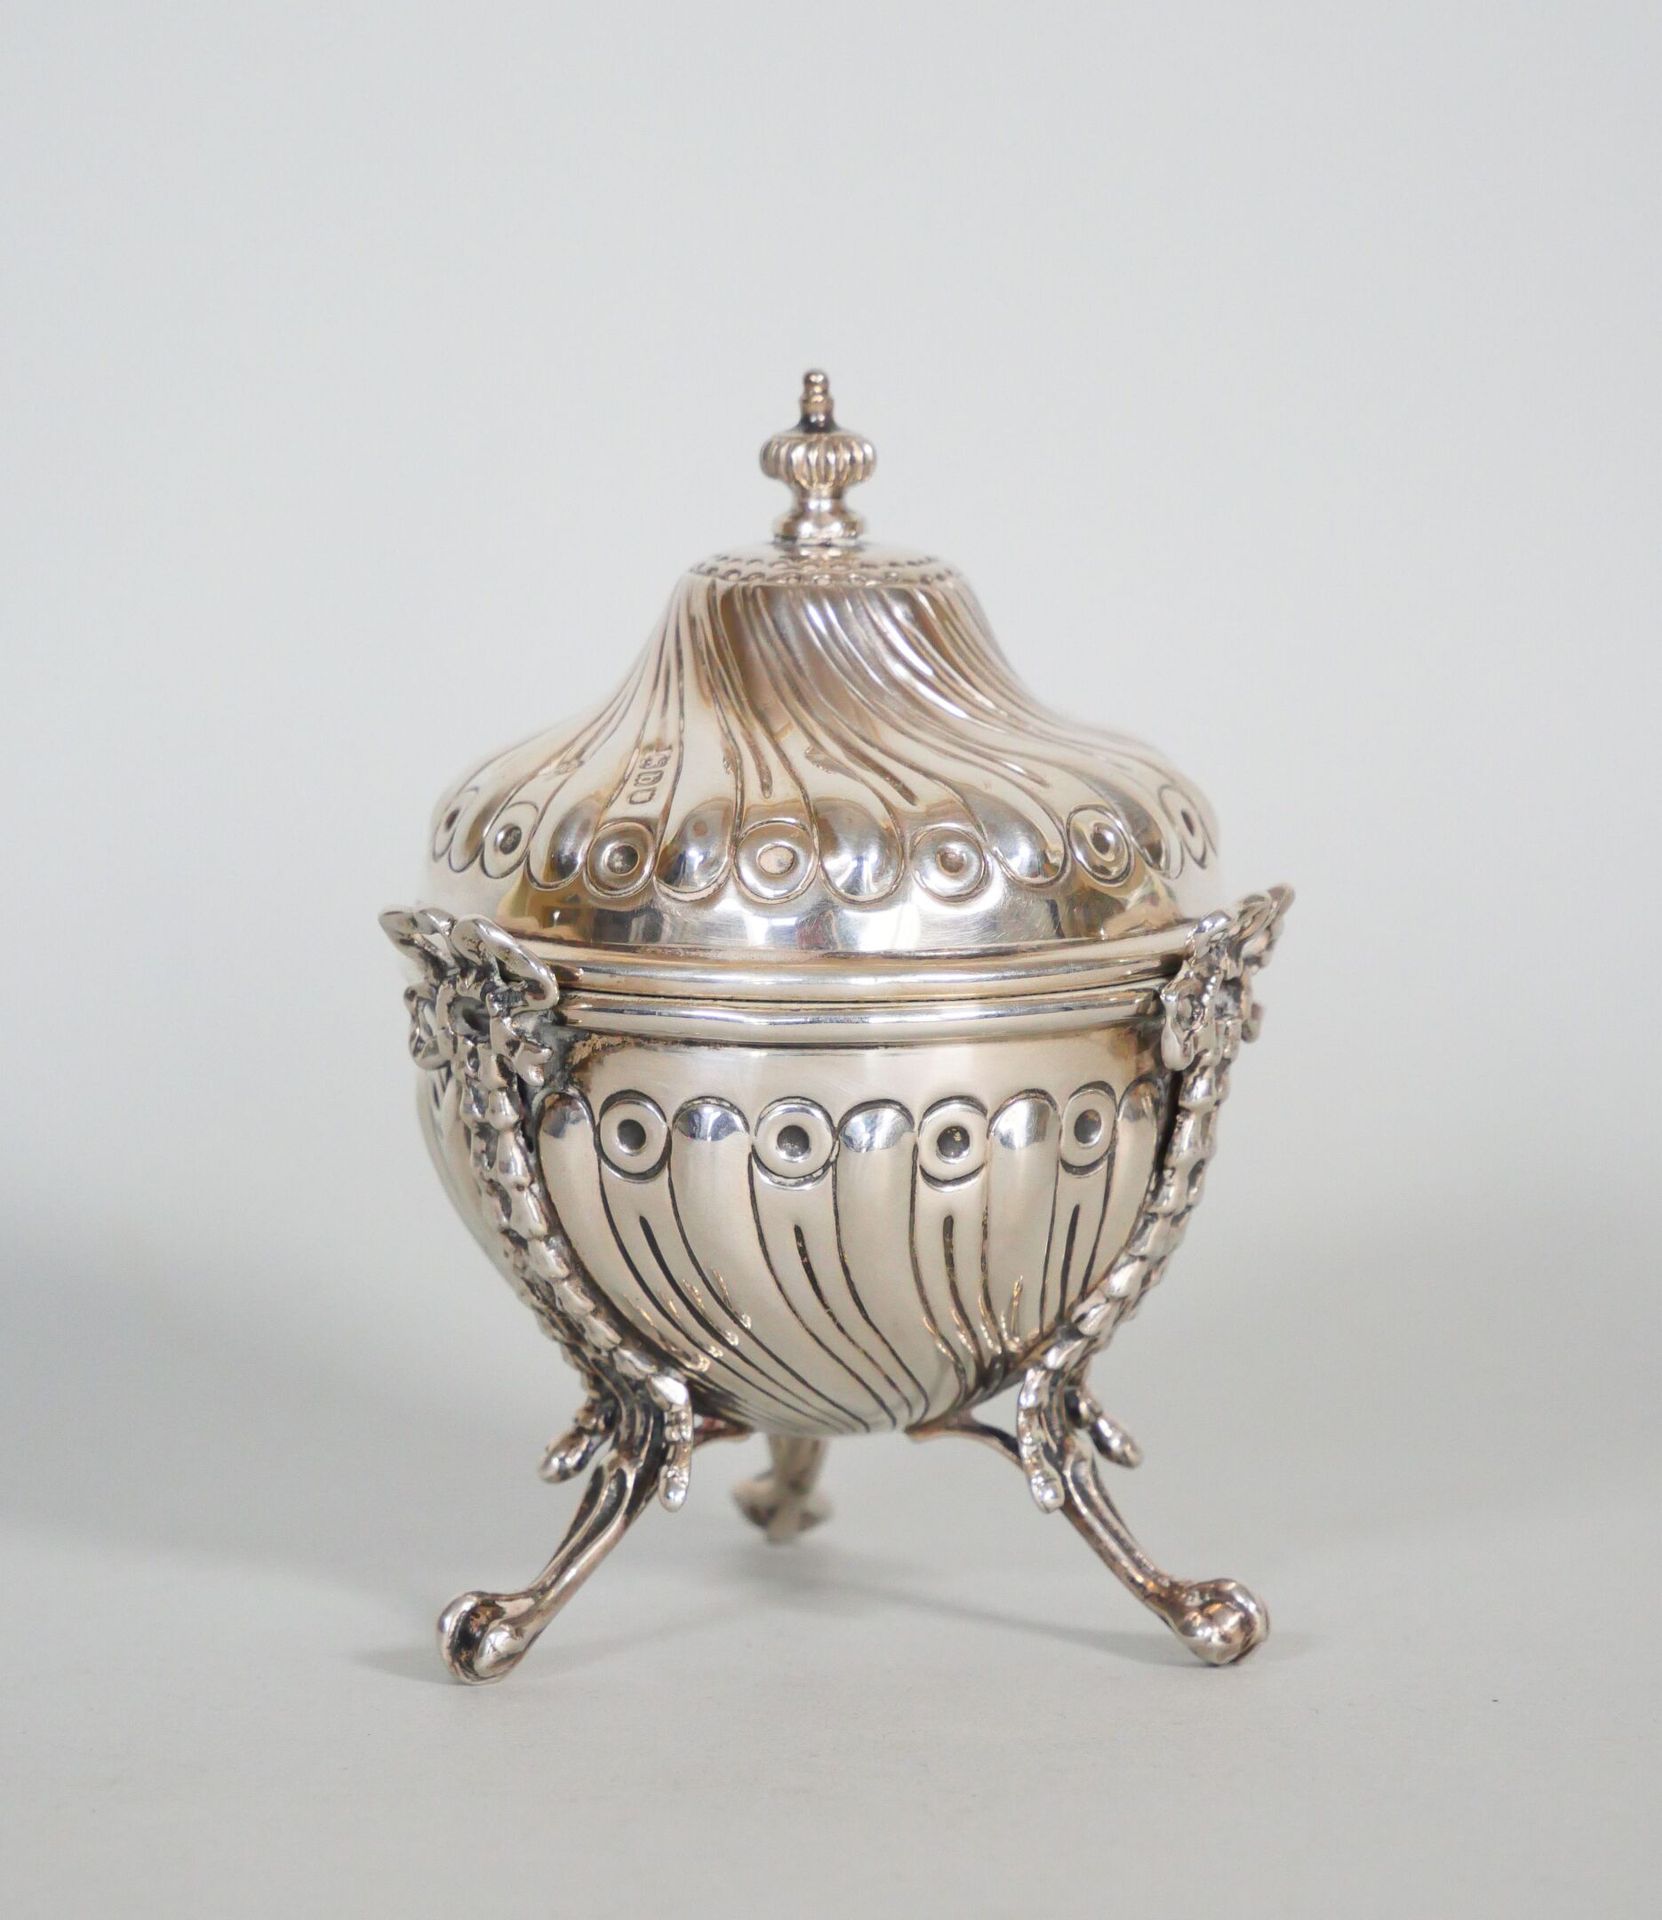 Null 银制小三角糖碗（925/1000），装饰有扭曲的笛子和丝带蝴蝶结。碗盖是一个旋转的陀螺形状。 
英国，伦敦，1901年。
重量 : 158克 (约)
&hellip;